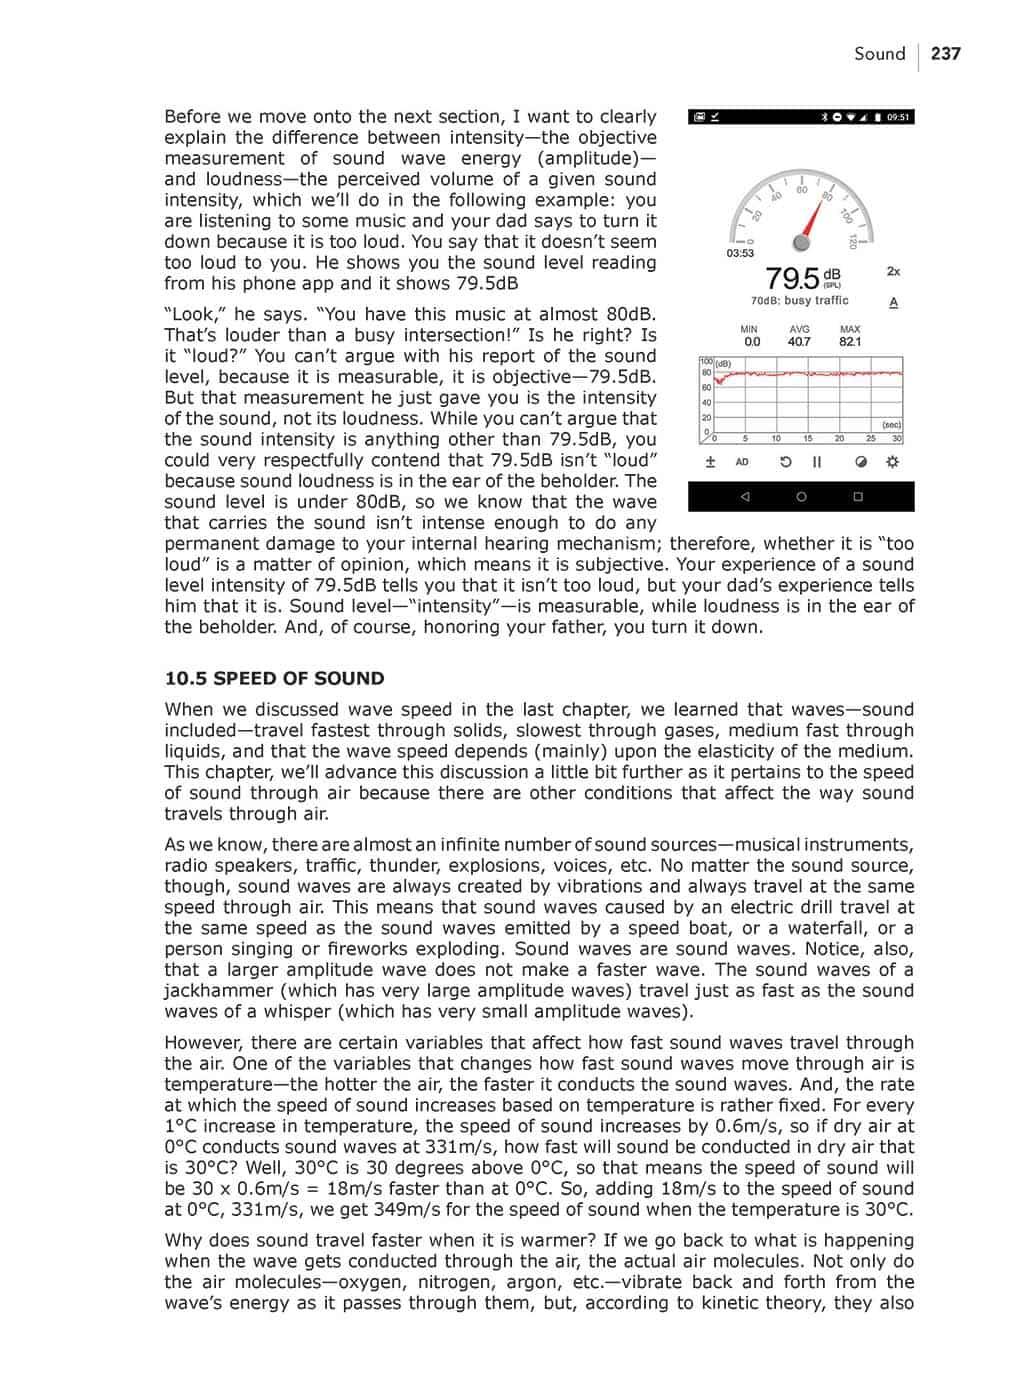 Fundamentals of Physics homeschool videos textbook sample page 2